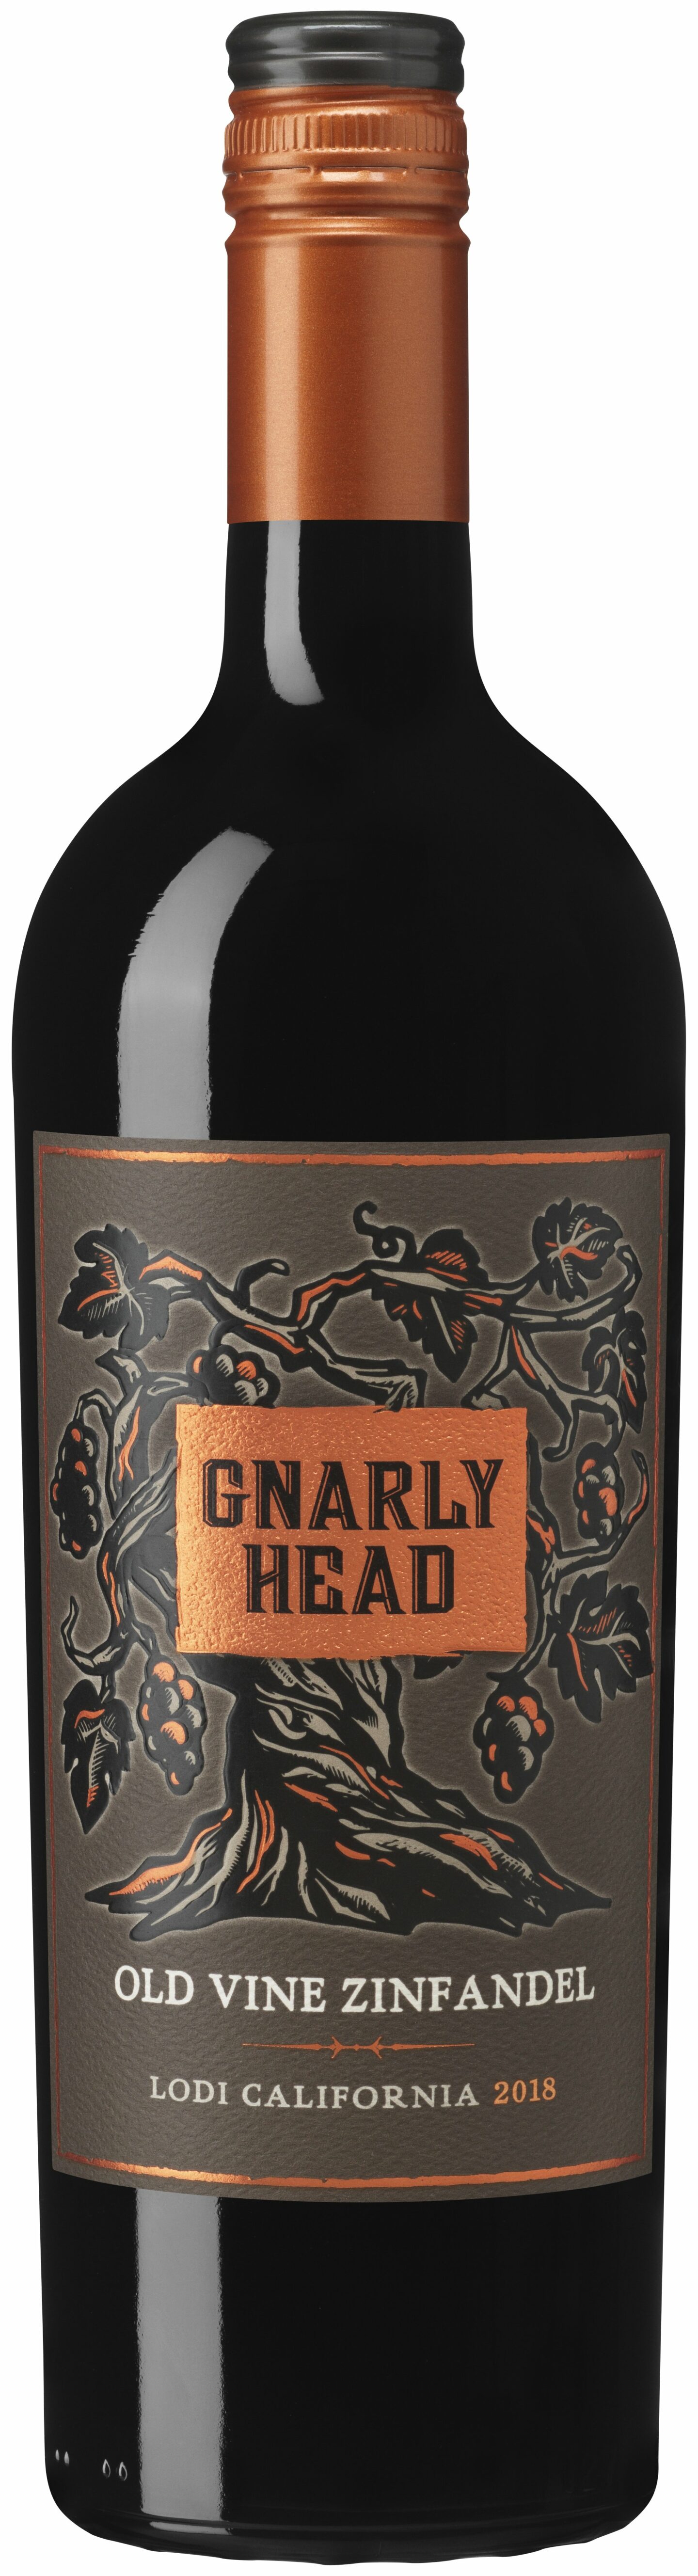 gnarly-head-old-vine-zinfandel-enjoy-wine-spirits